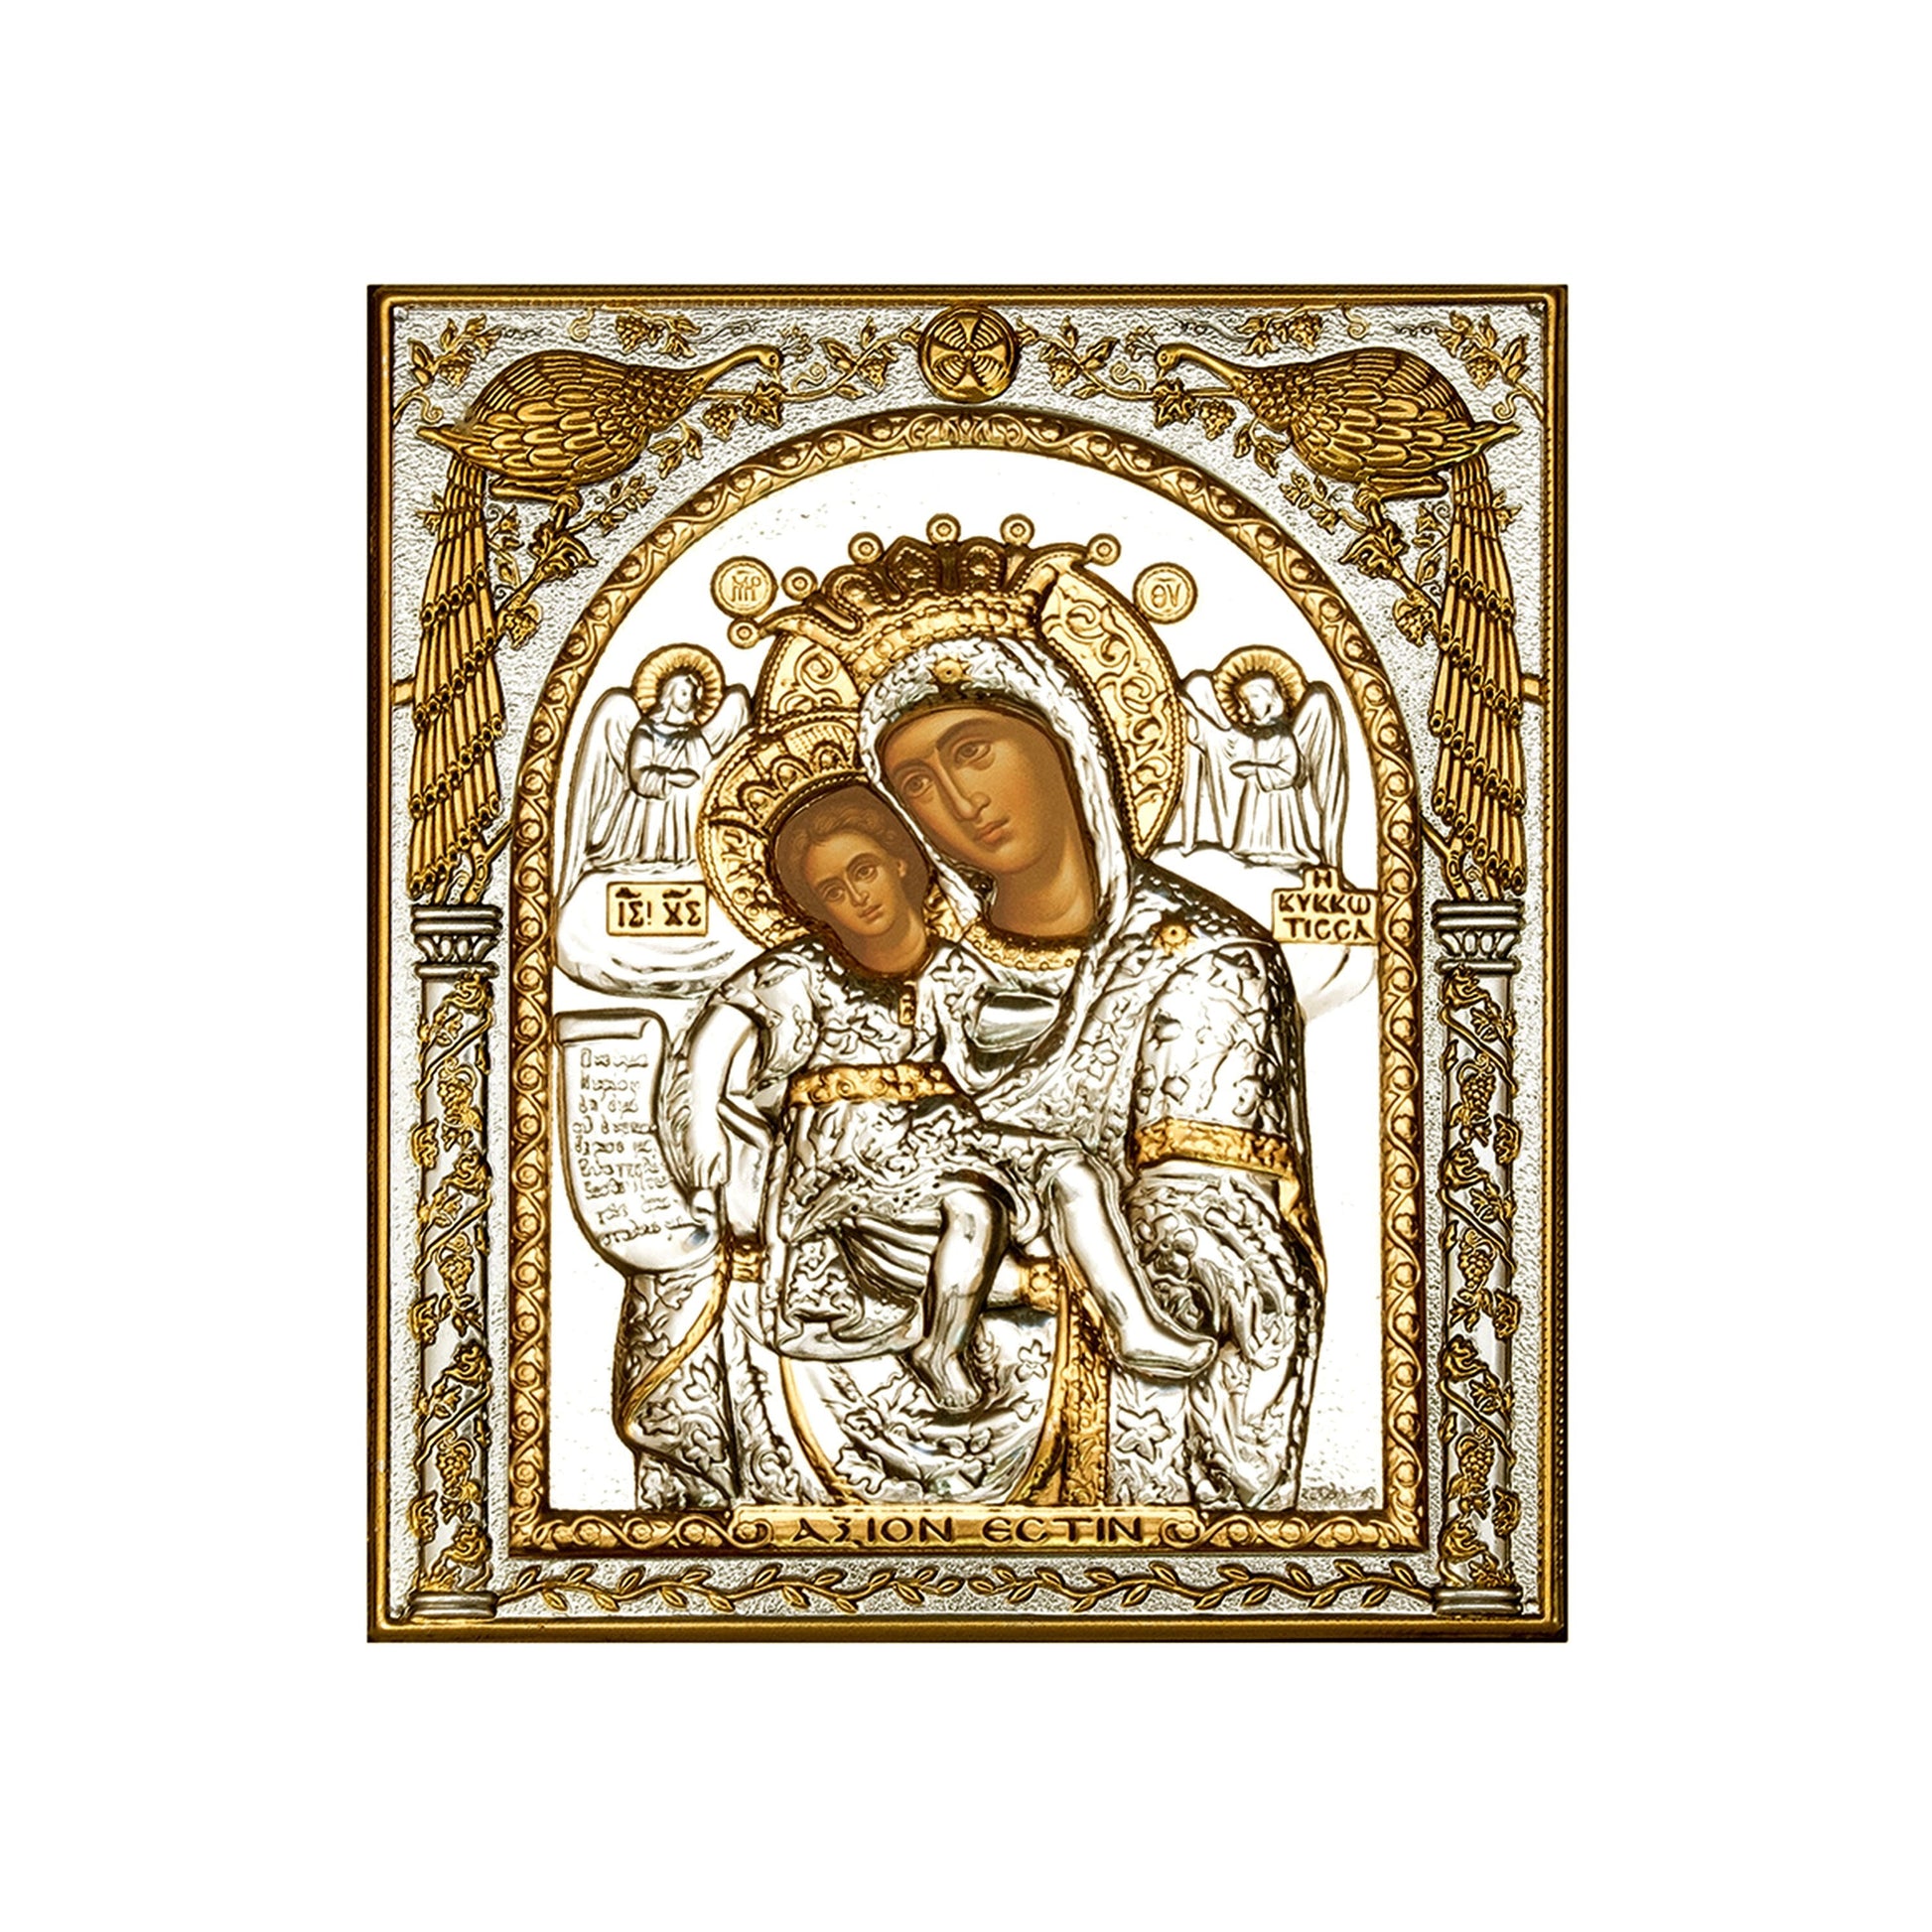 Virgin Mary icon Panagia Axion Esti, Handmade Silver 999 Greek Orthodox icon, Byzantine art wall hanging on wood plaque religious icon gift